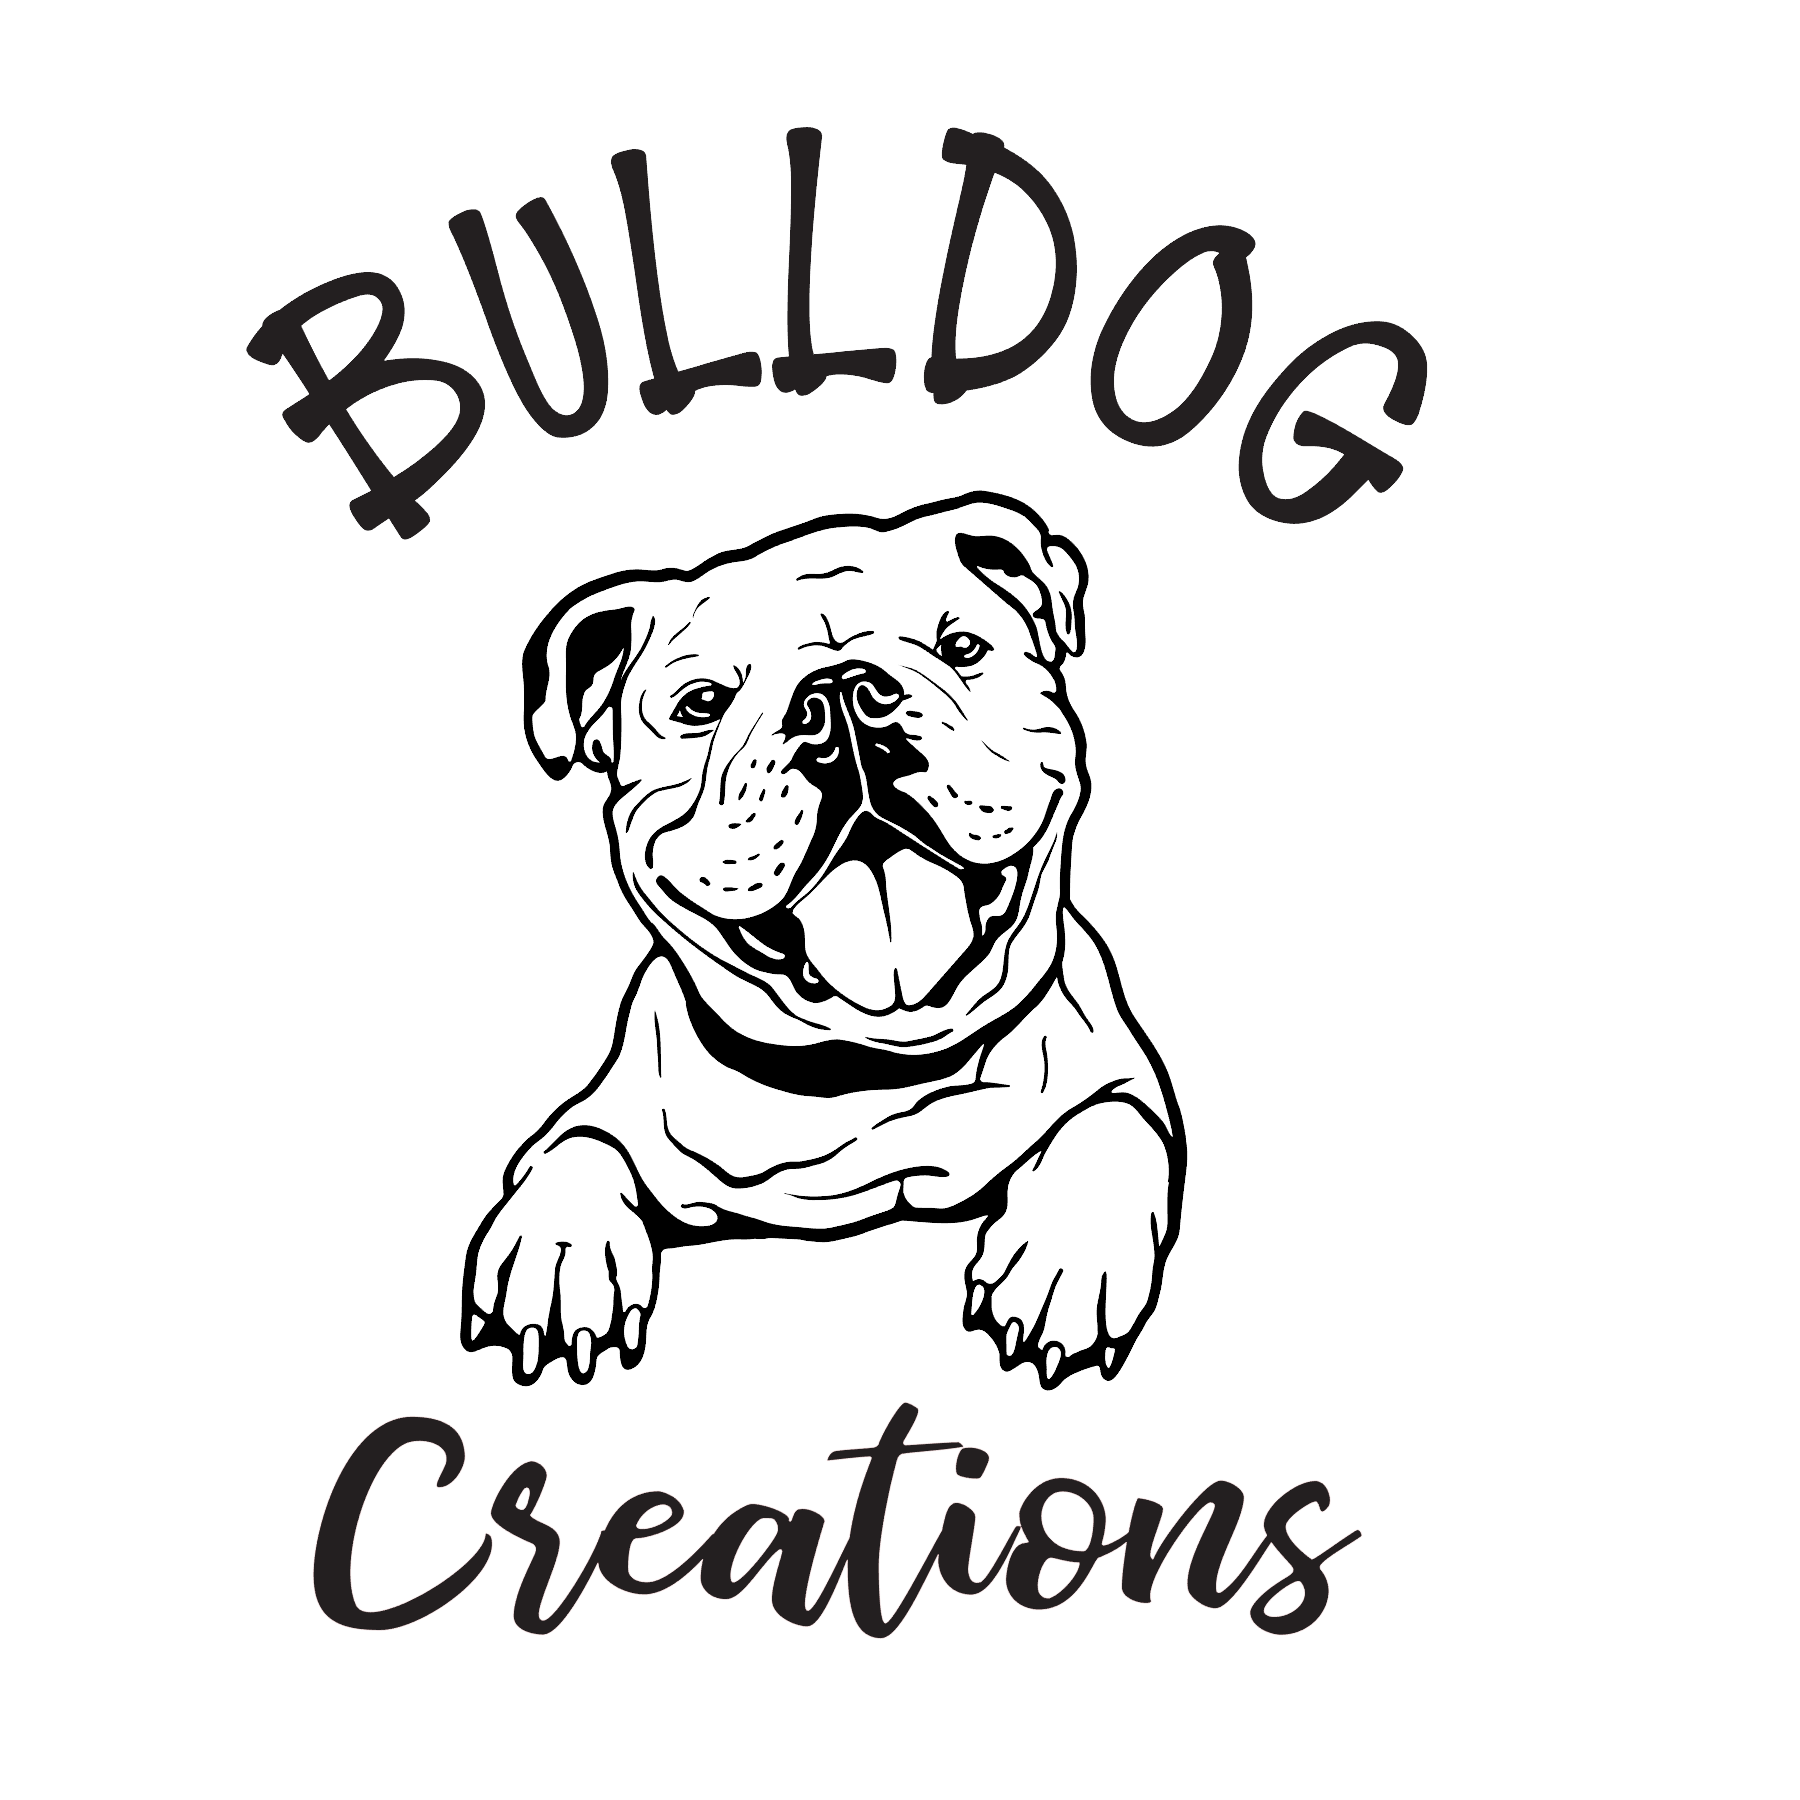 Bulldog CreationsMd